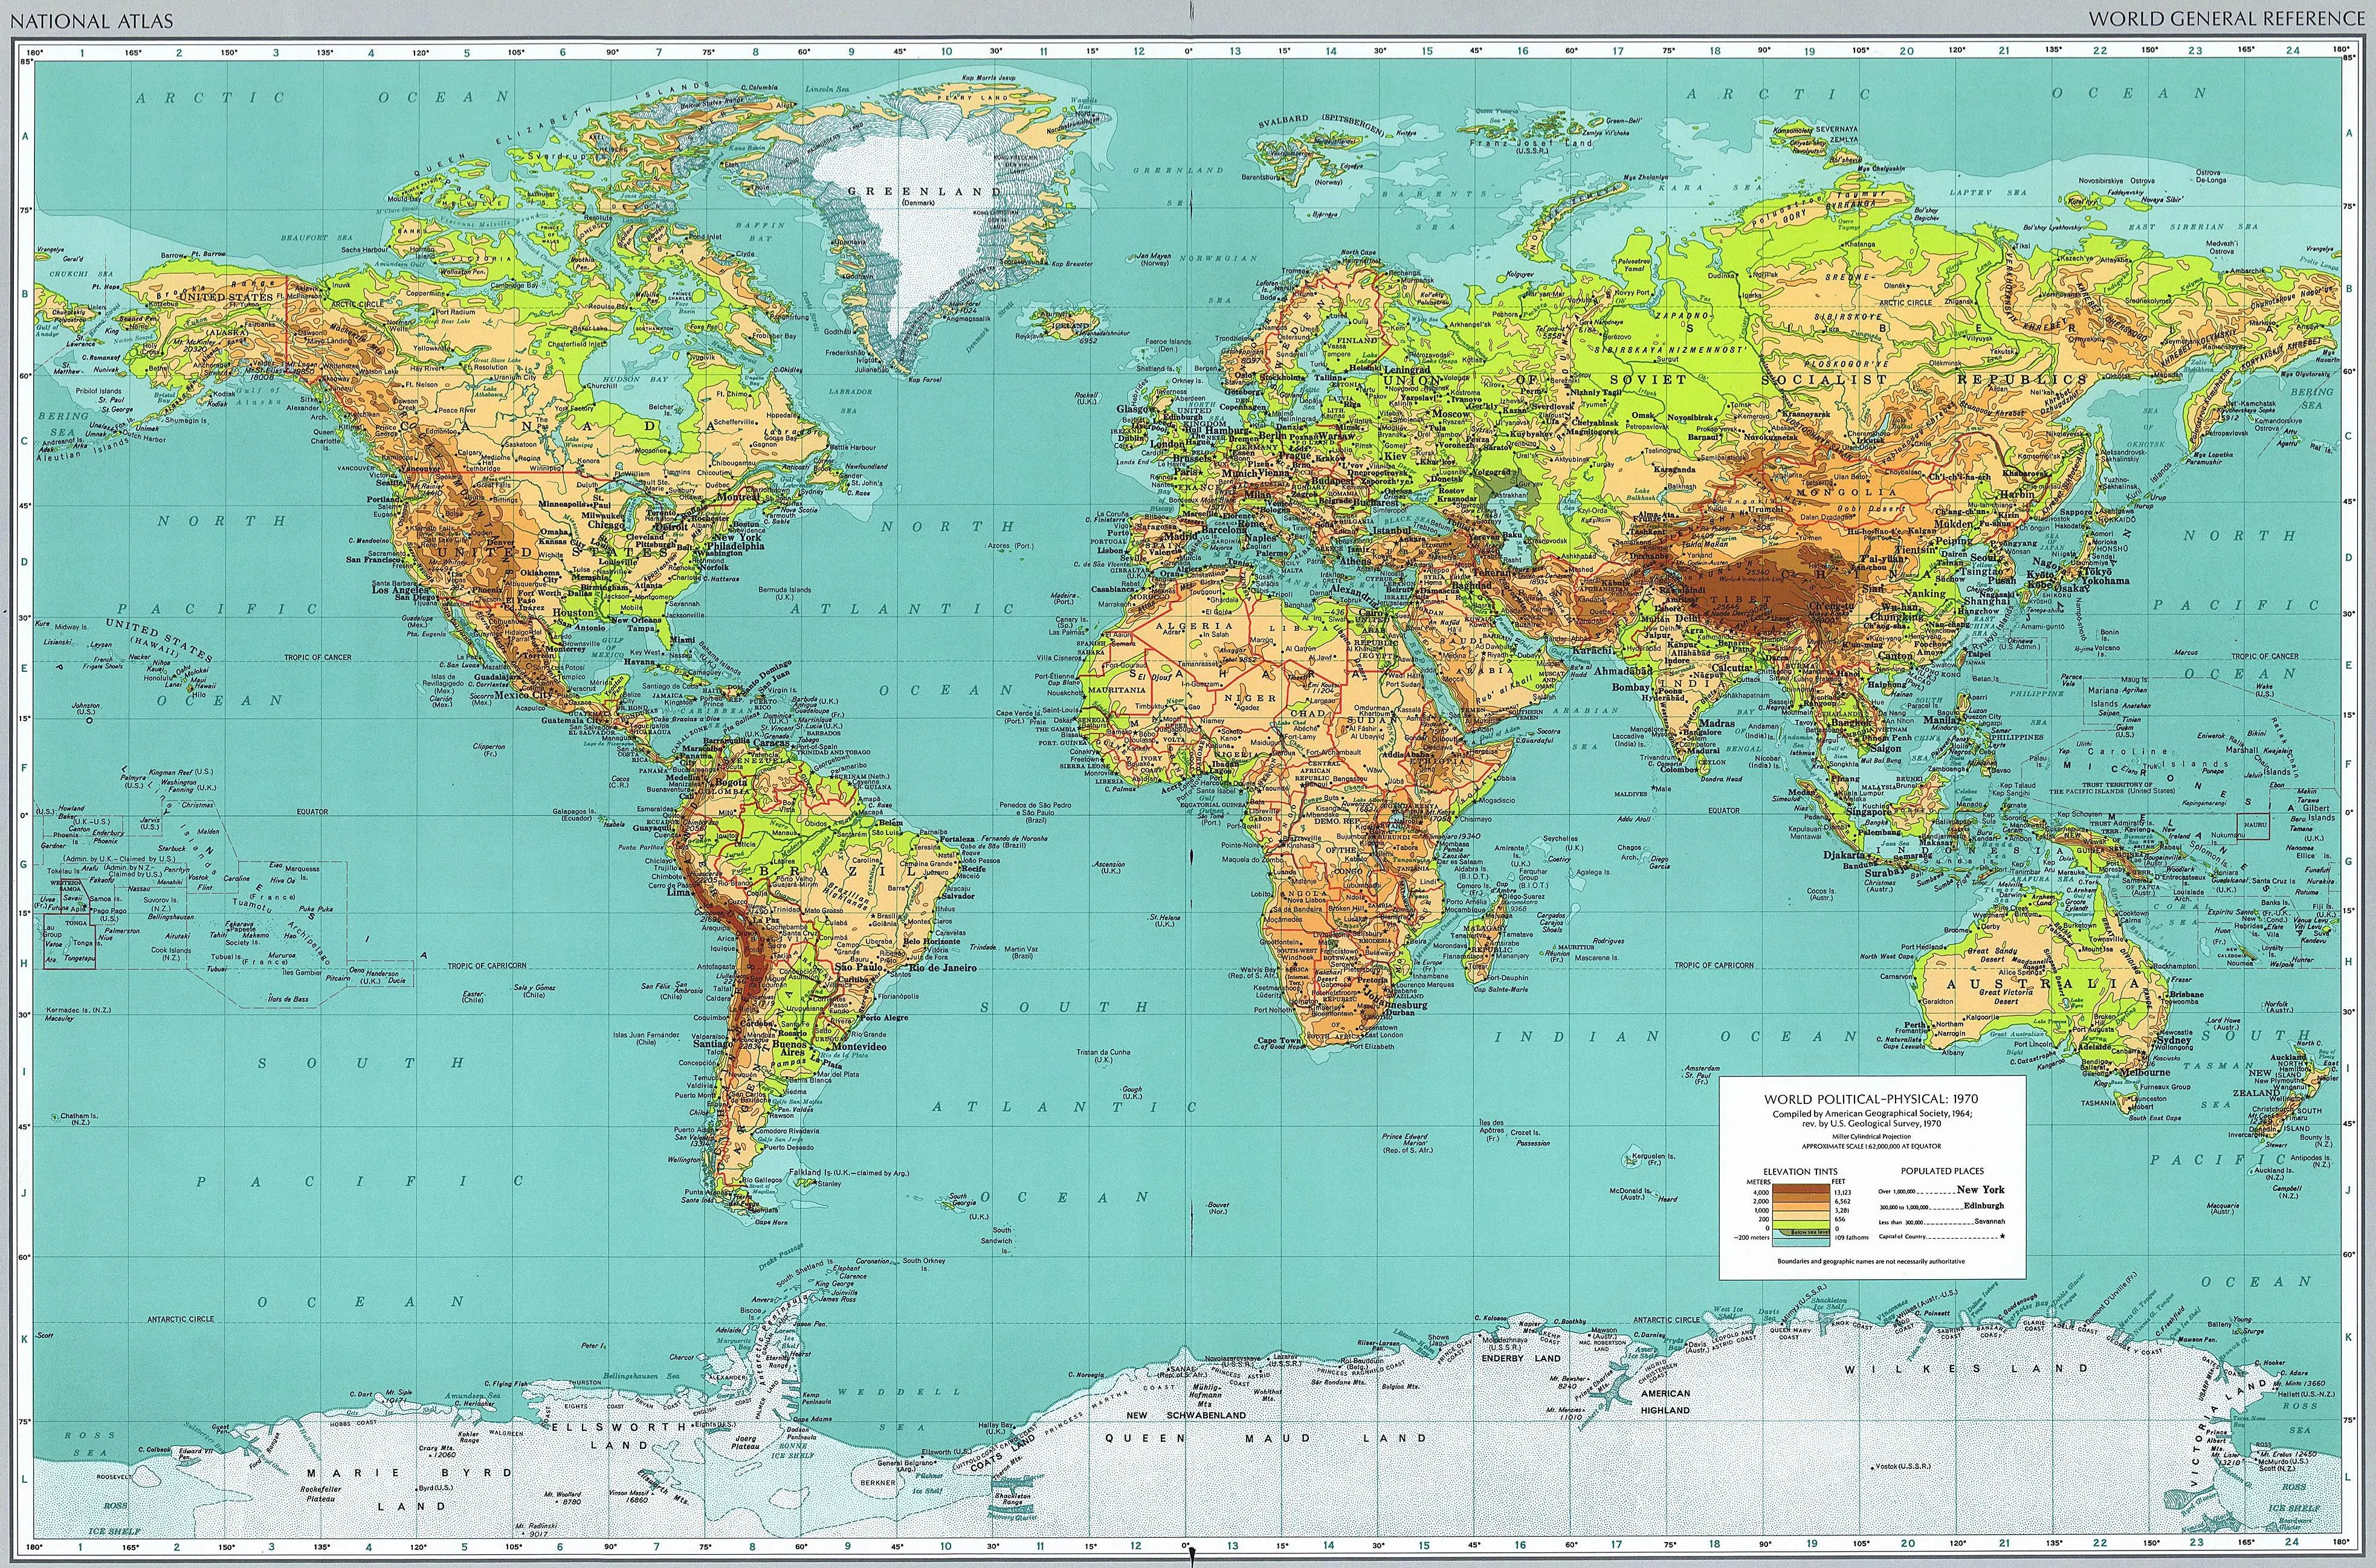 Mapa Físico del Mundo 1970 - Tamaño completo